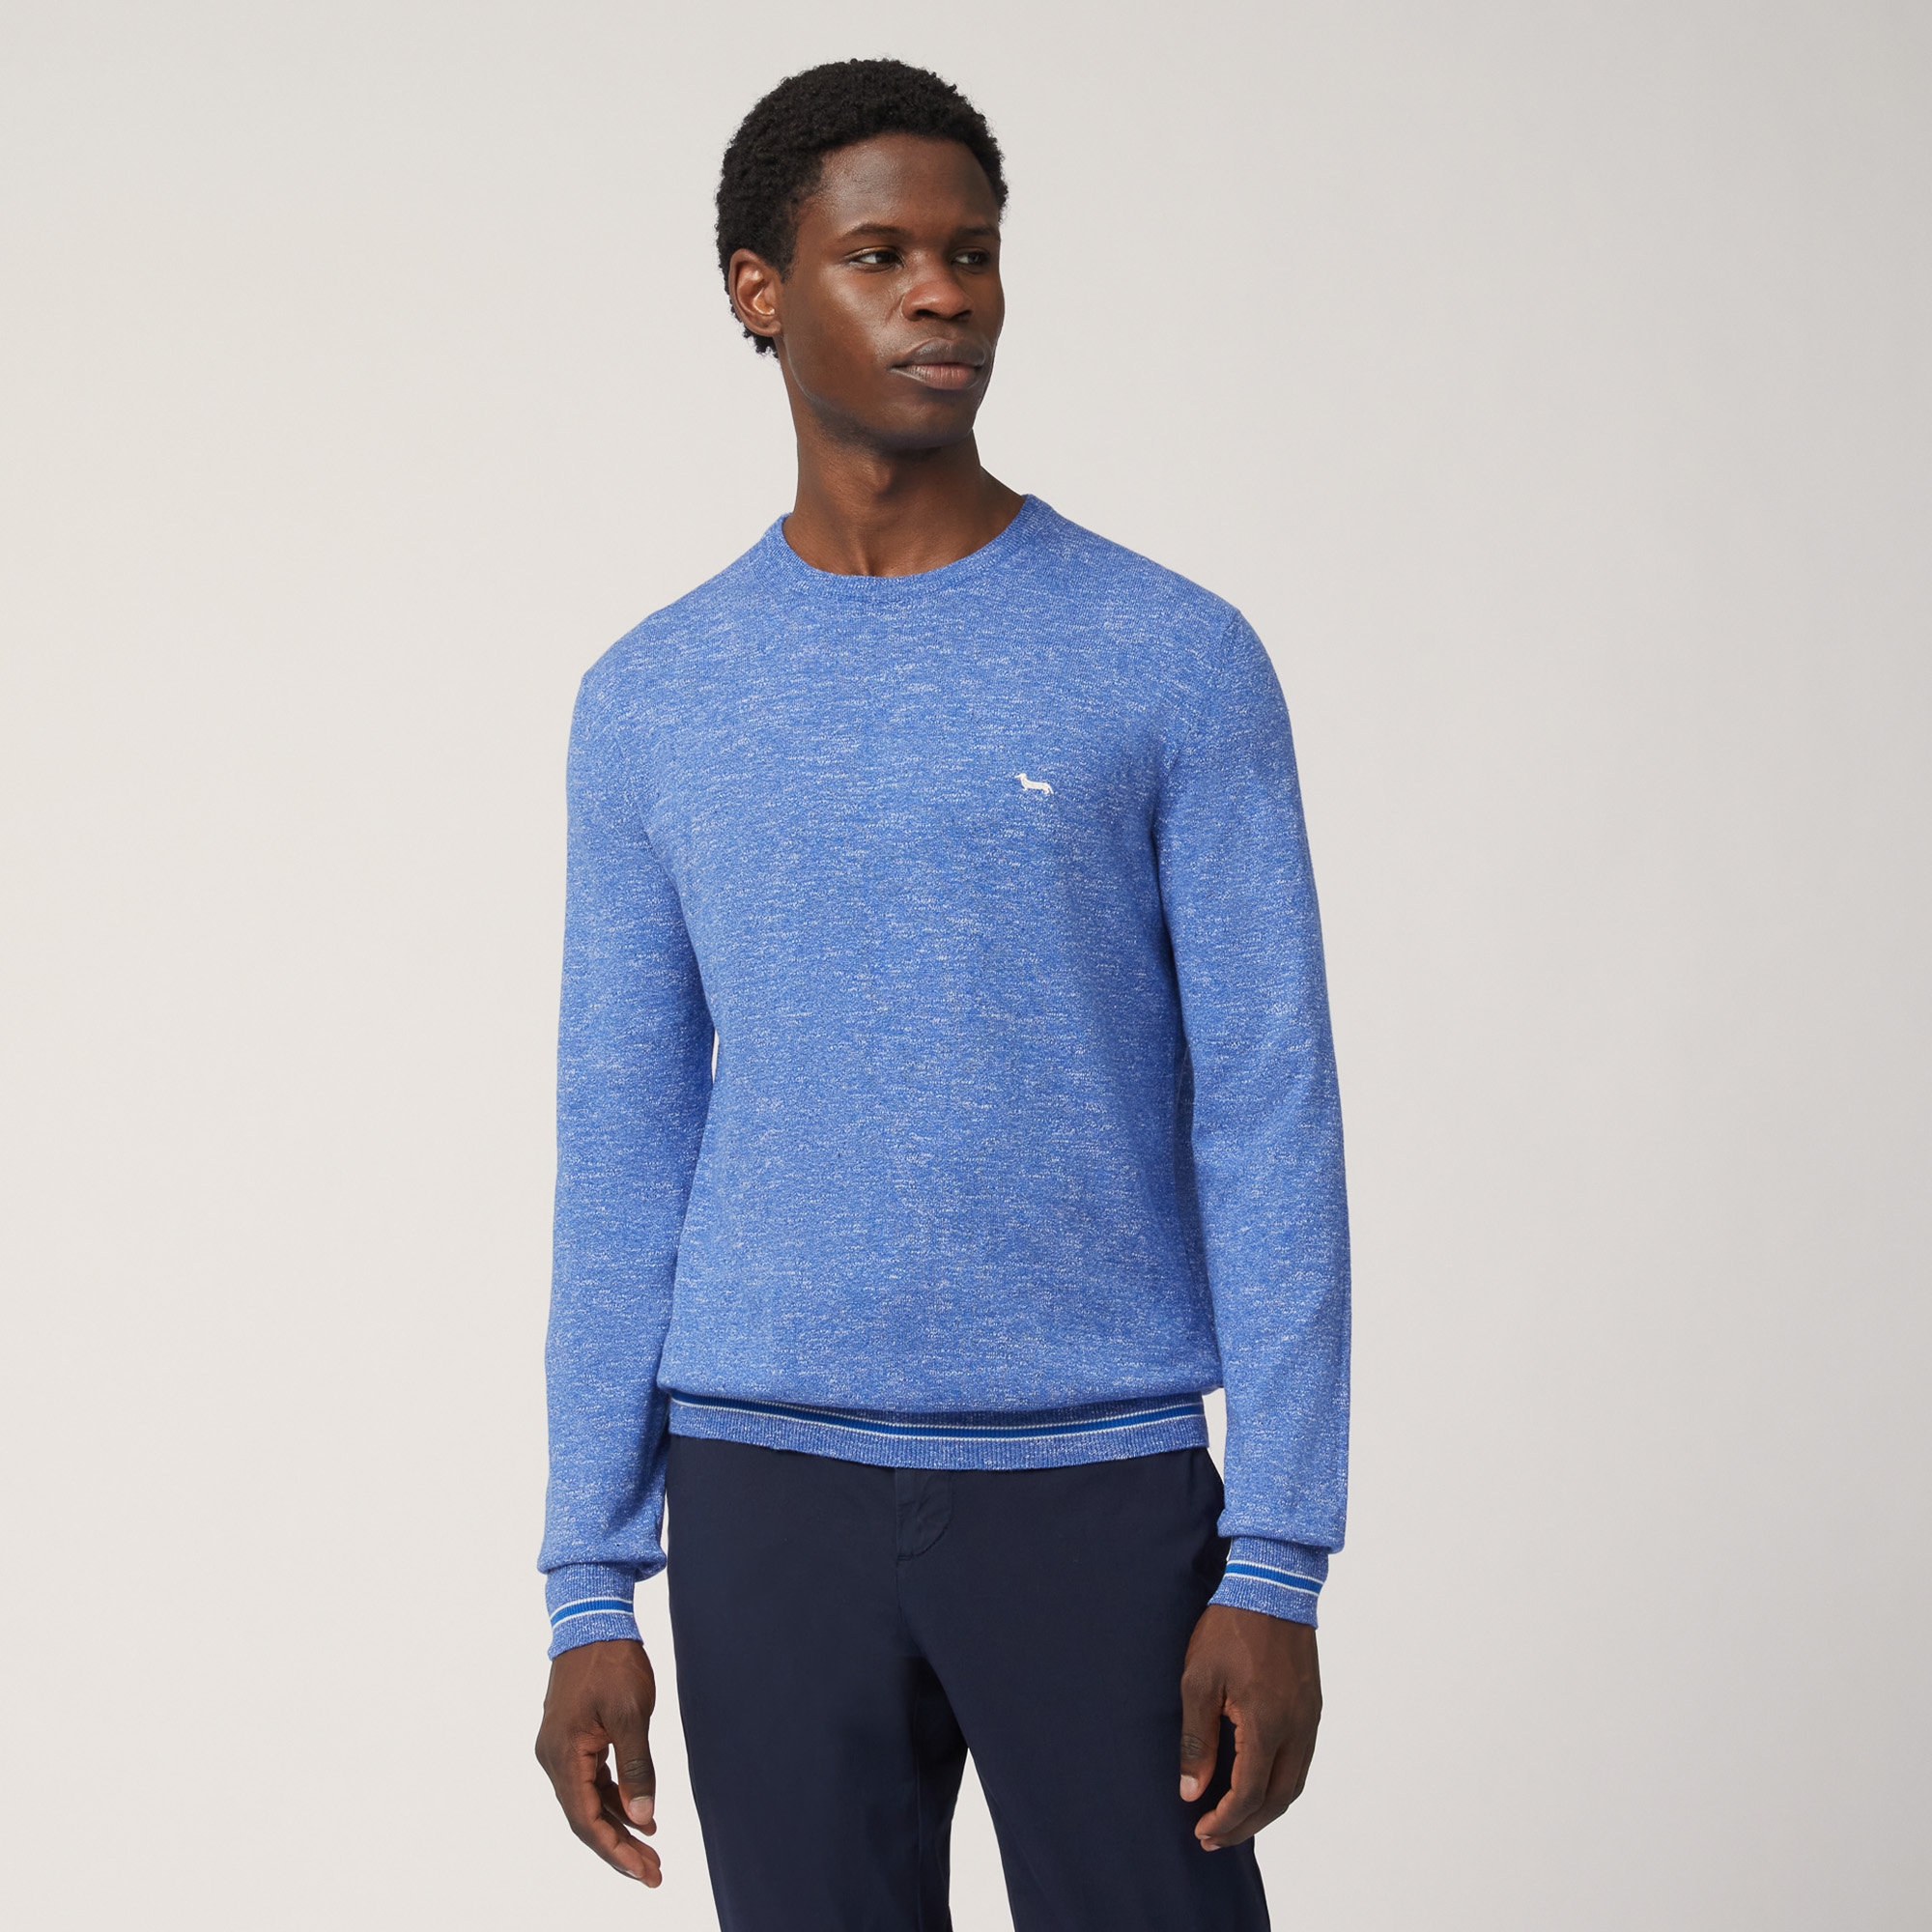 Cotton Blend Tweed Pullover, Light Blue, large